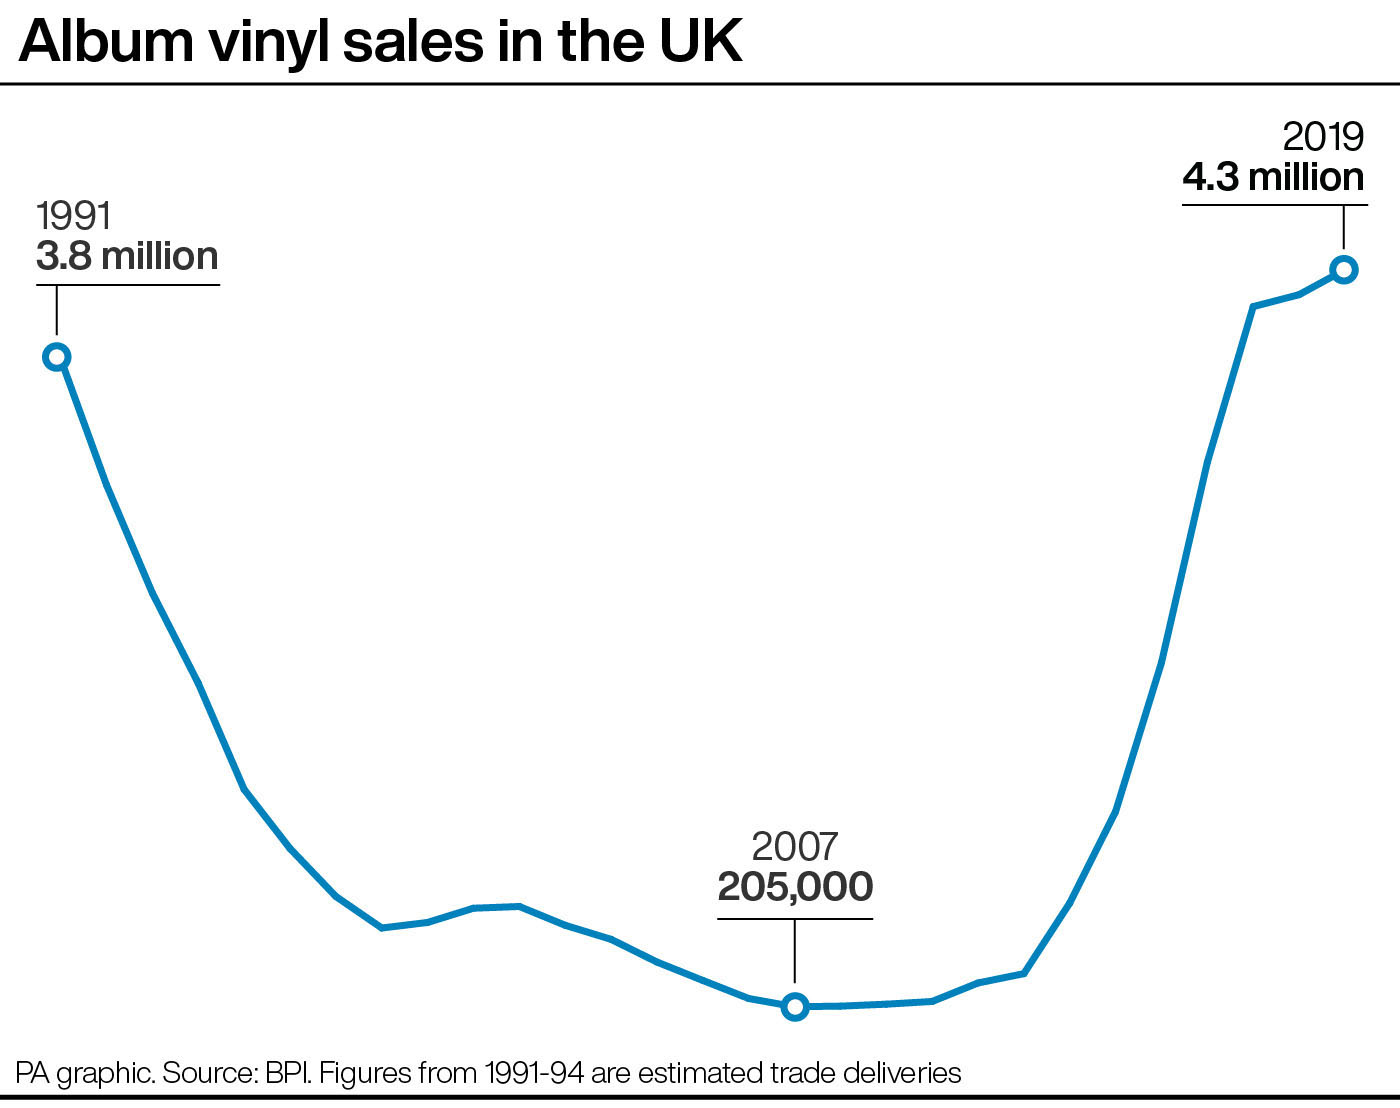 Album vinyl sales in the UK